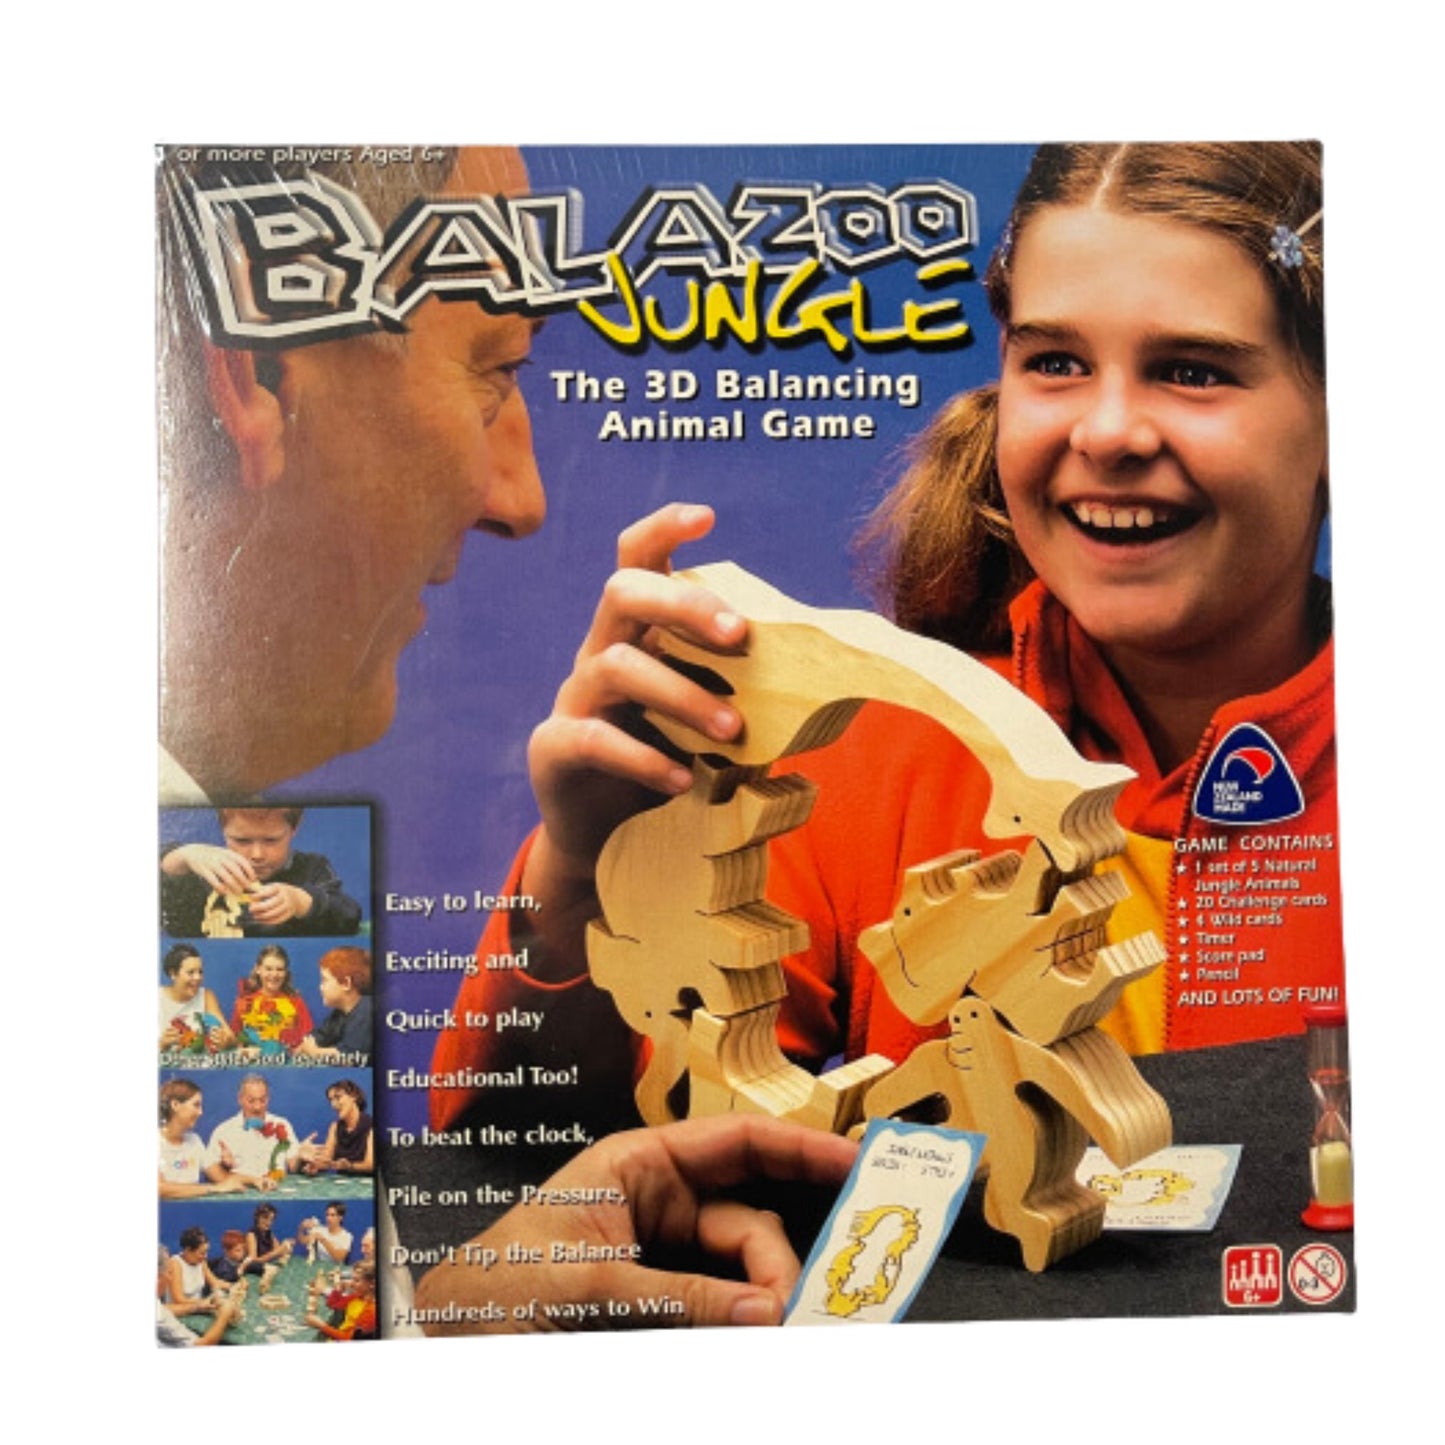 Balazoo Jungle balancing animals game.